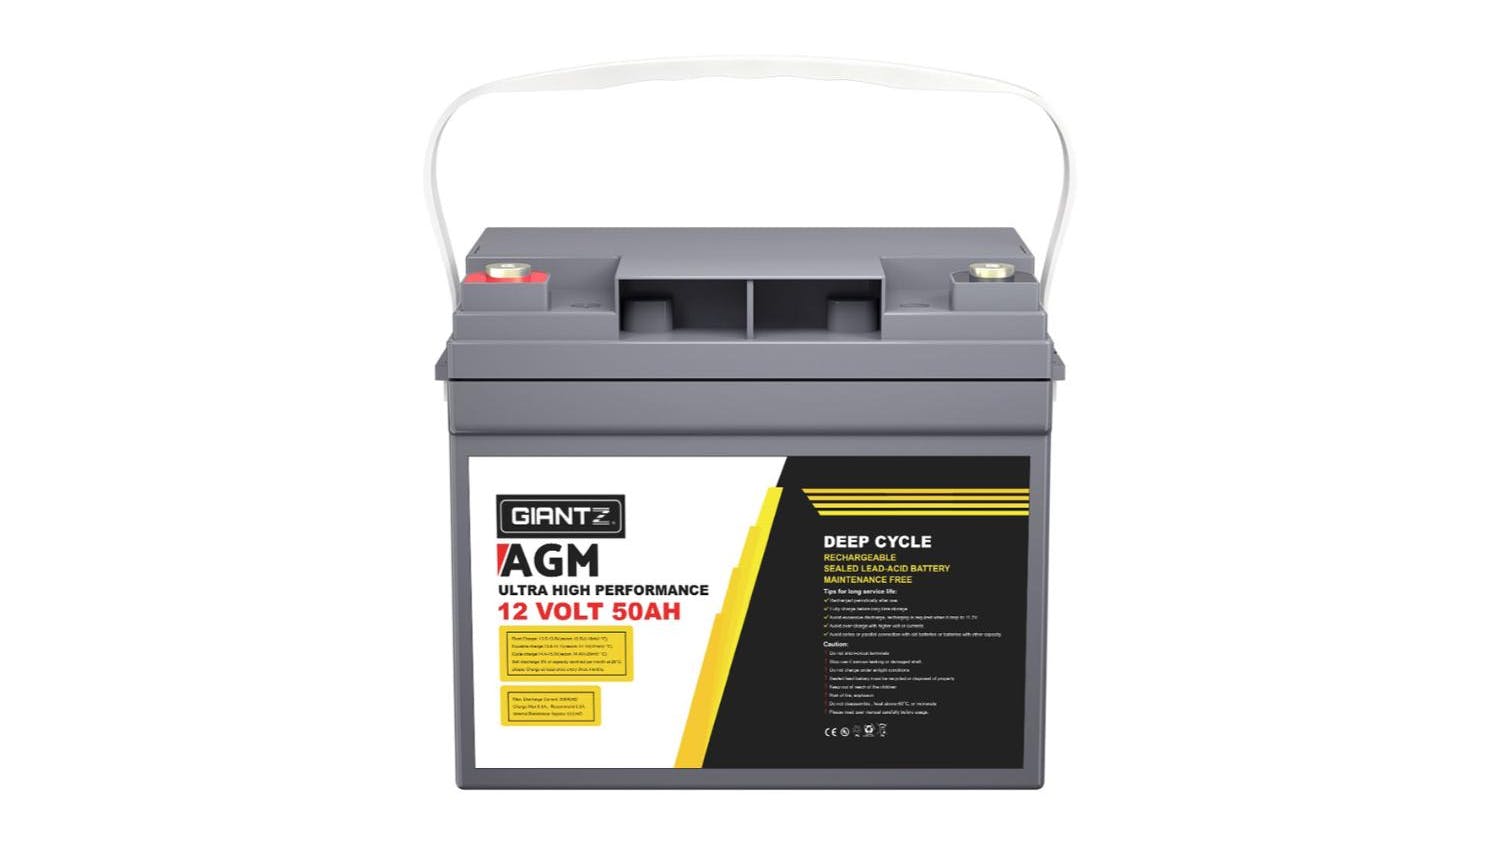 Giantz AGM Rechargeable Deep Cycle Lead-Acid Battery 12V 50AH 2pcs.